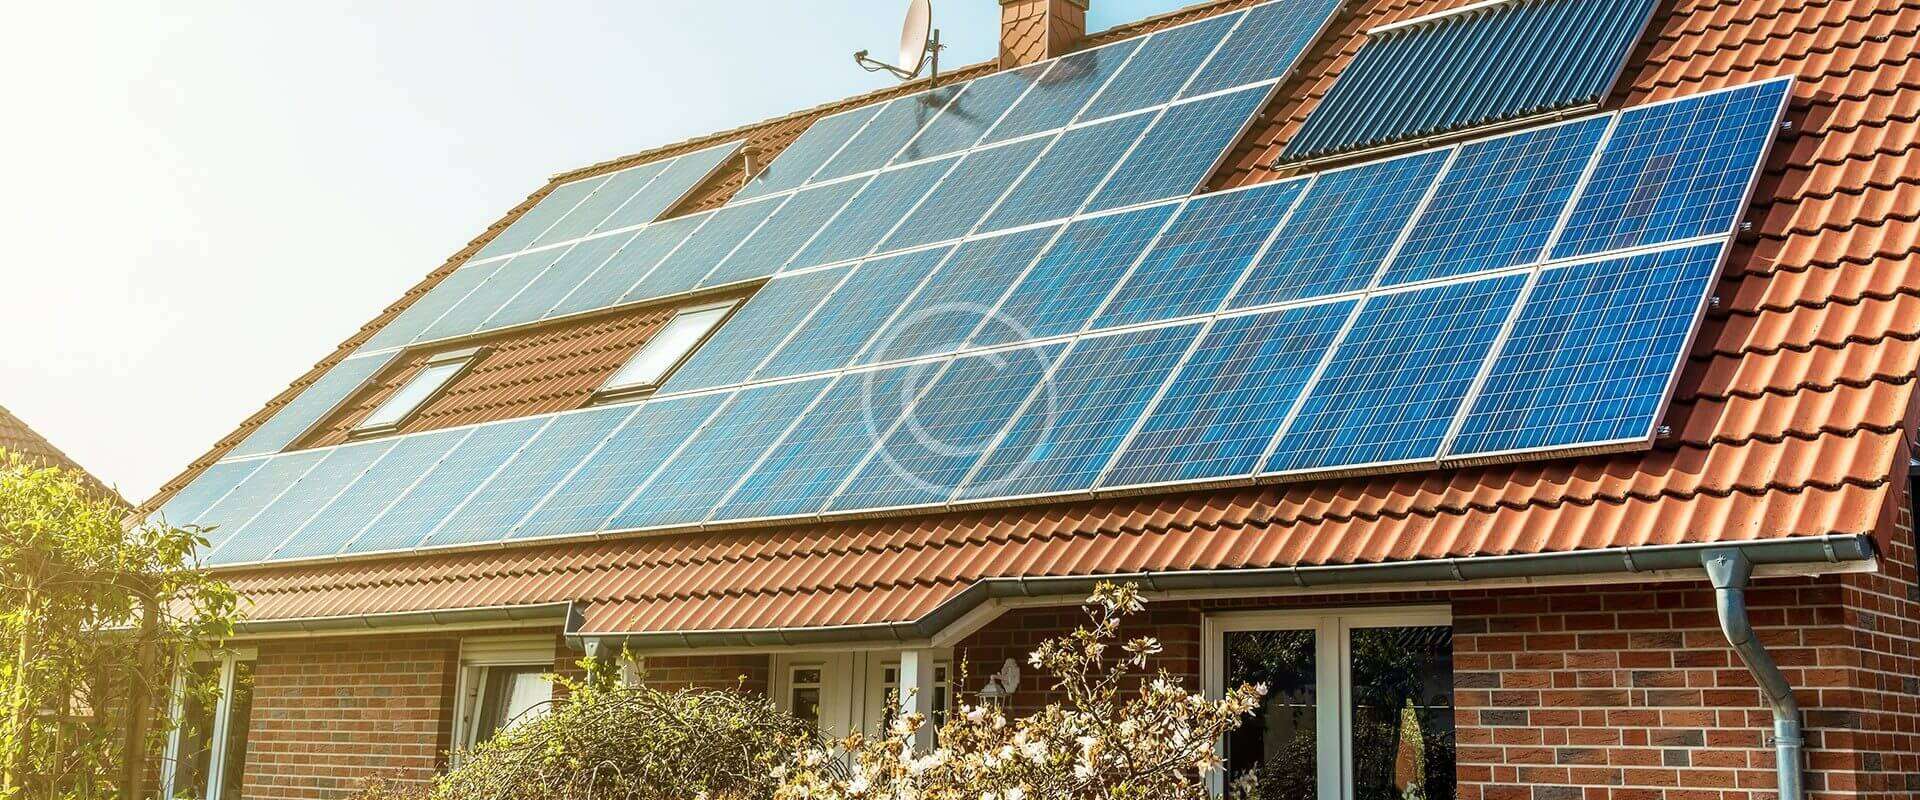 Solar Home Energy System